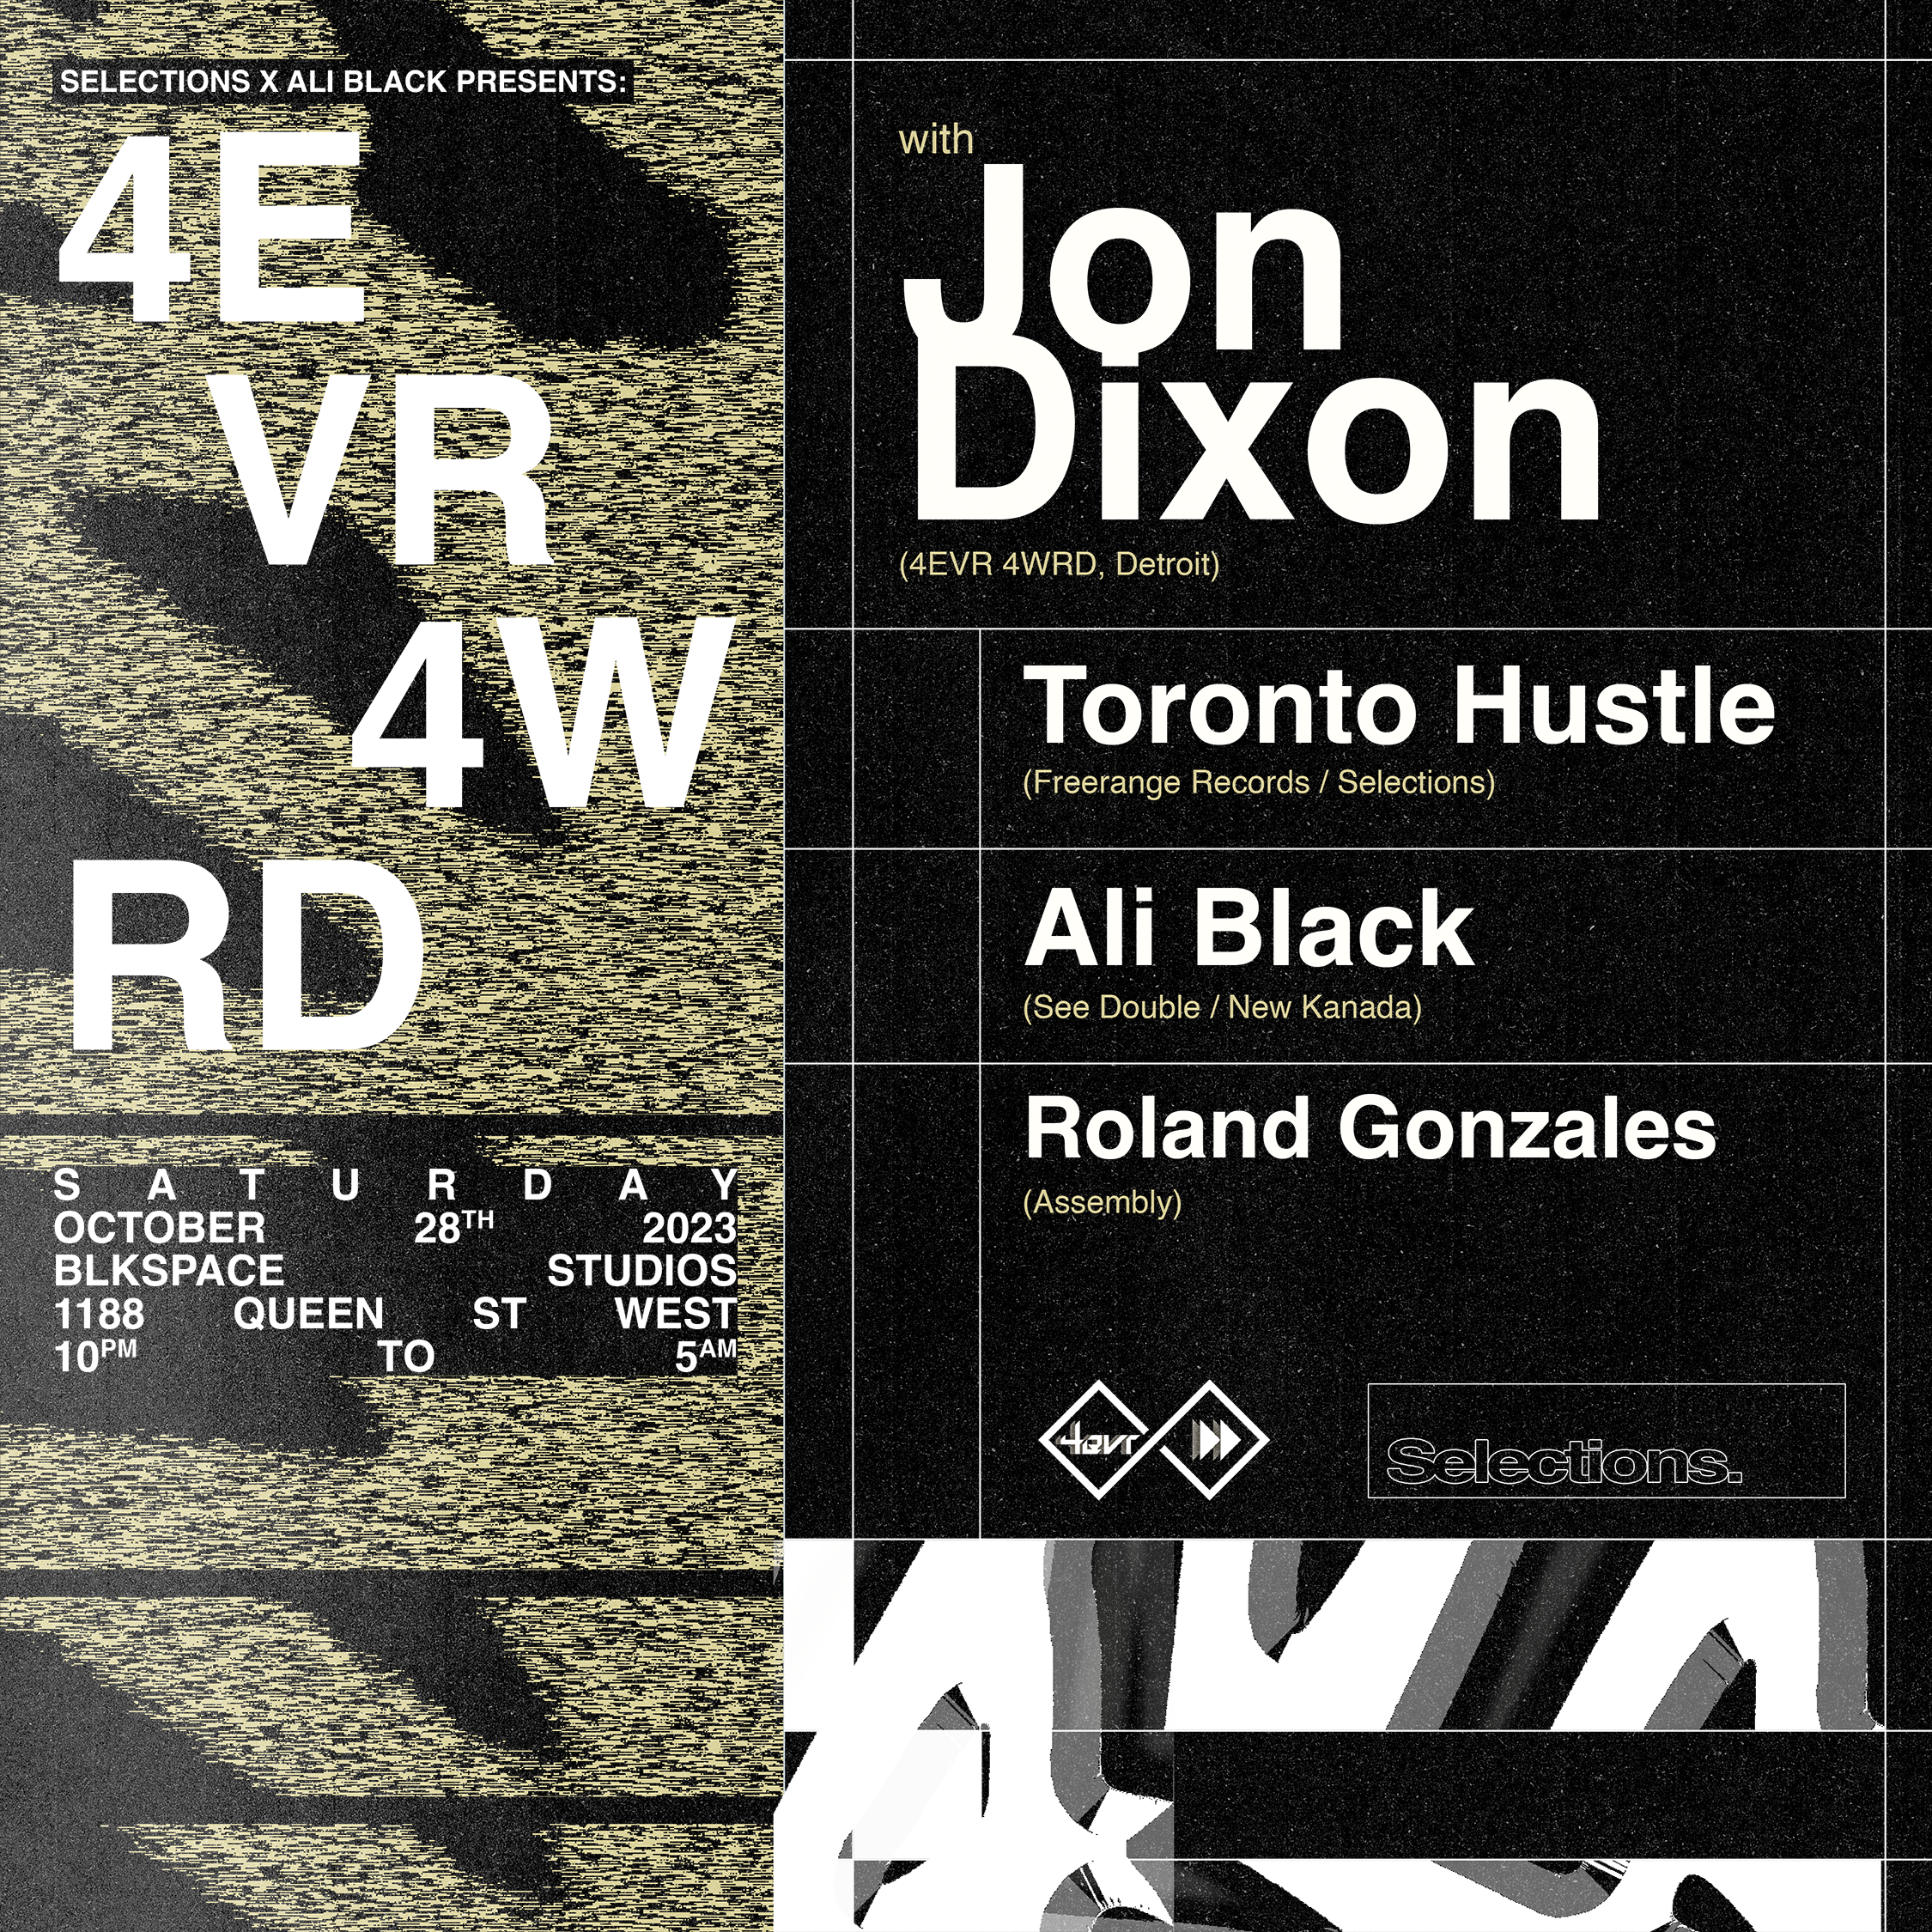 Selections x Ali Black Pres. 4evr 4wrd with Jon Dixon (Detroit) - フライヤー裏